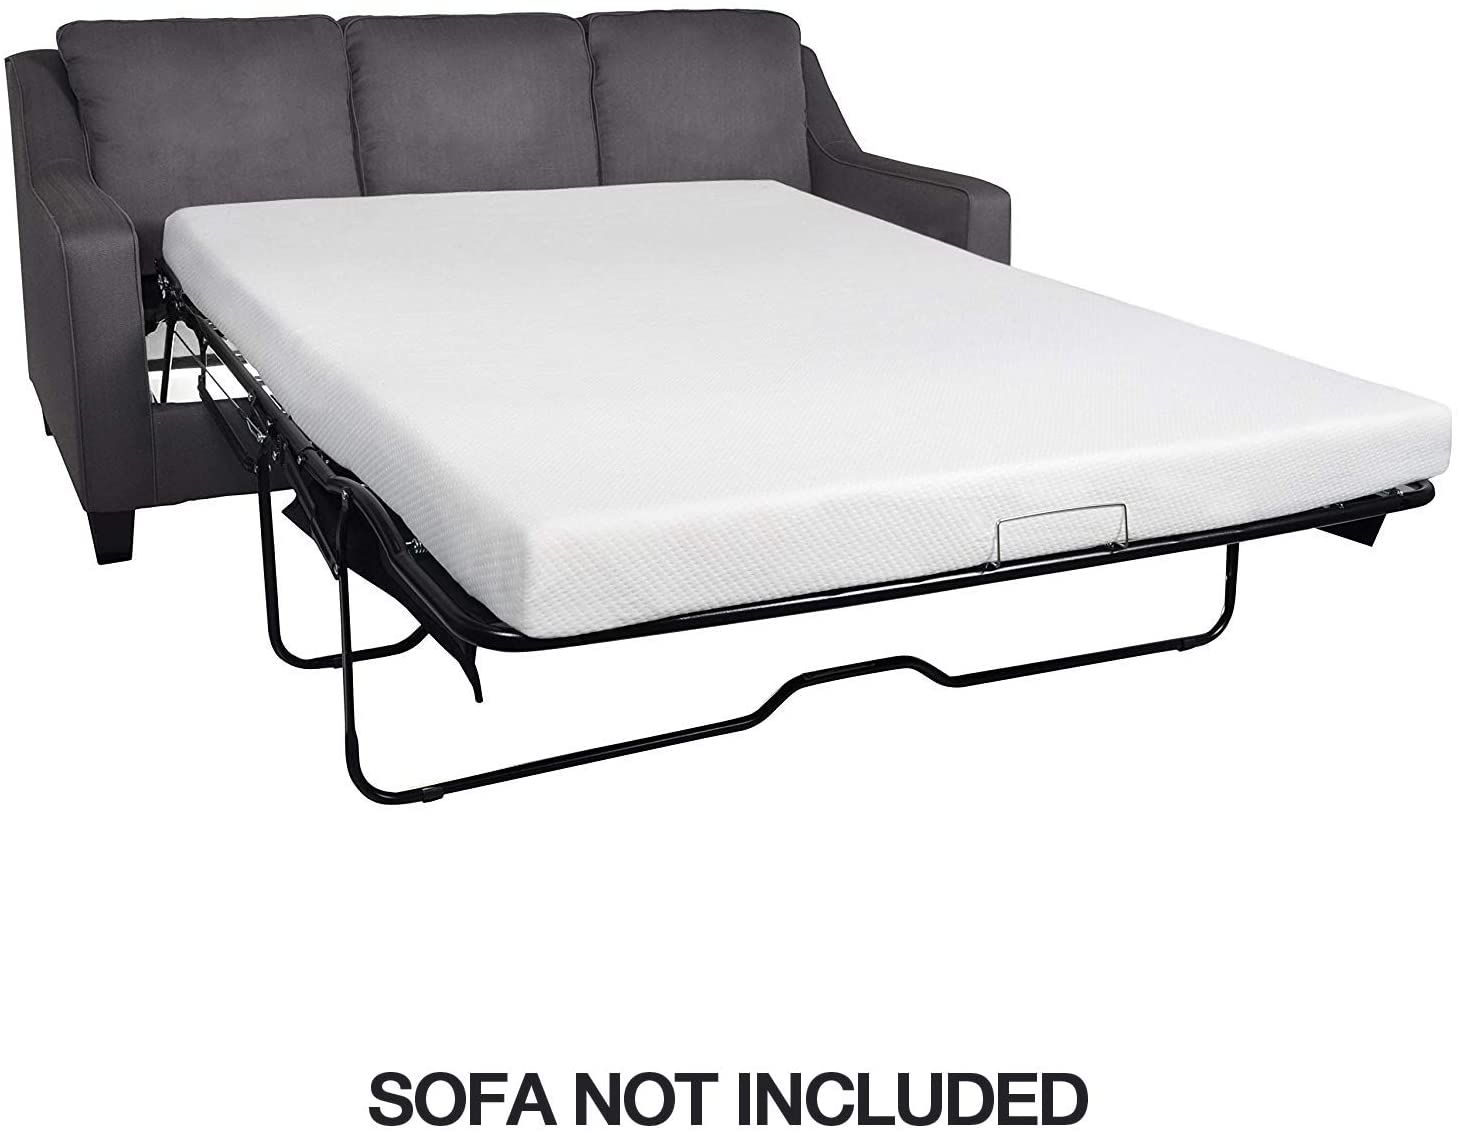 5 inch sofa bed mattress